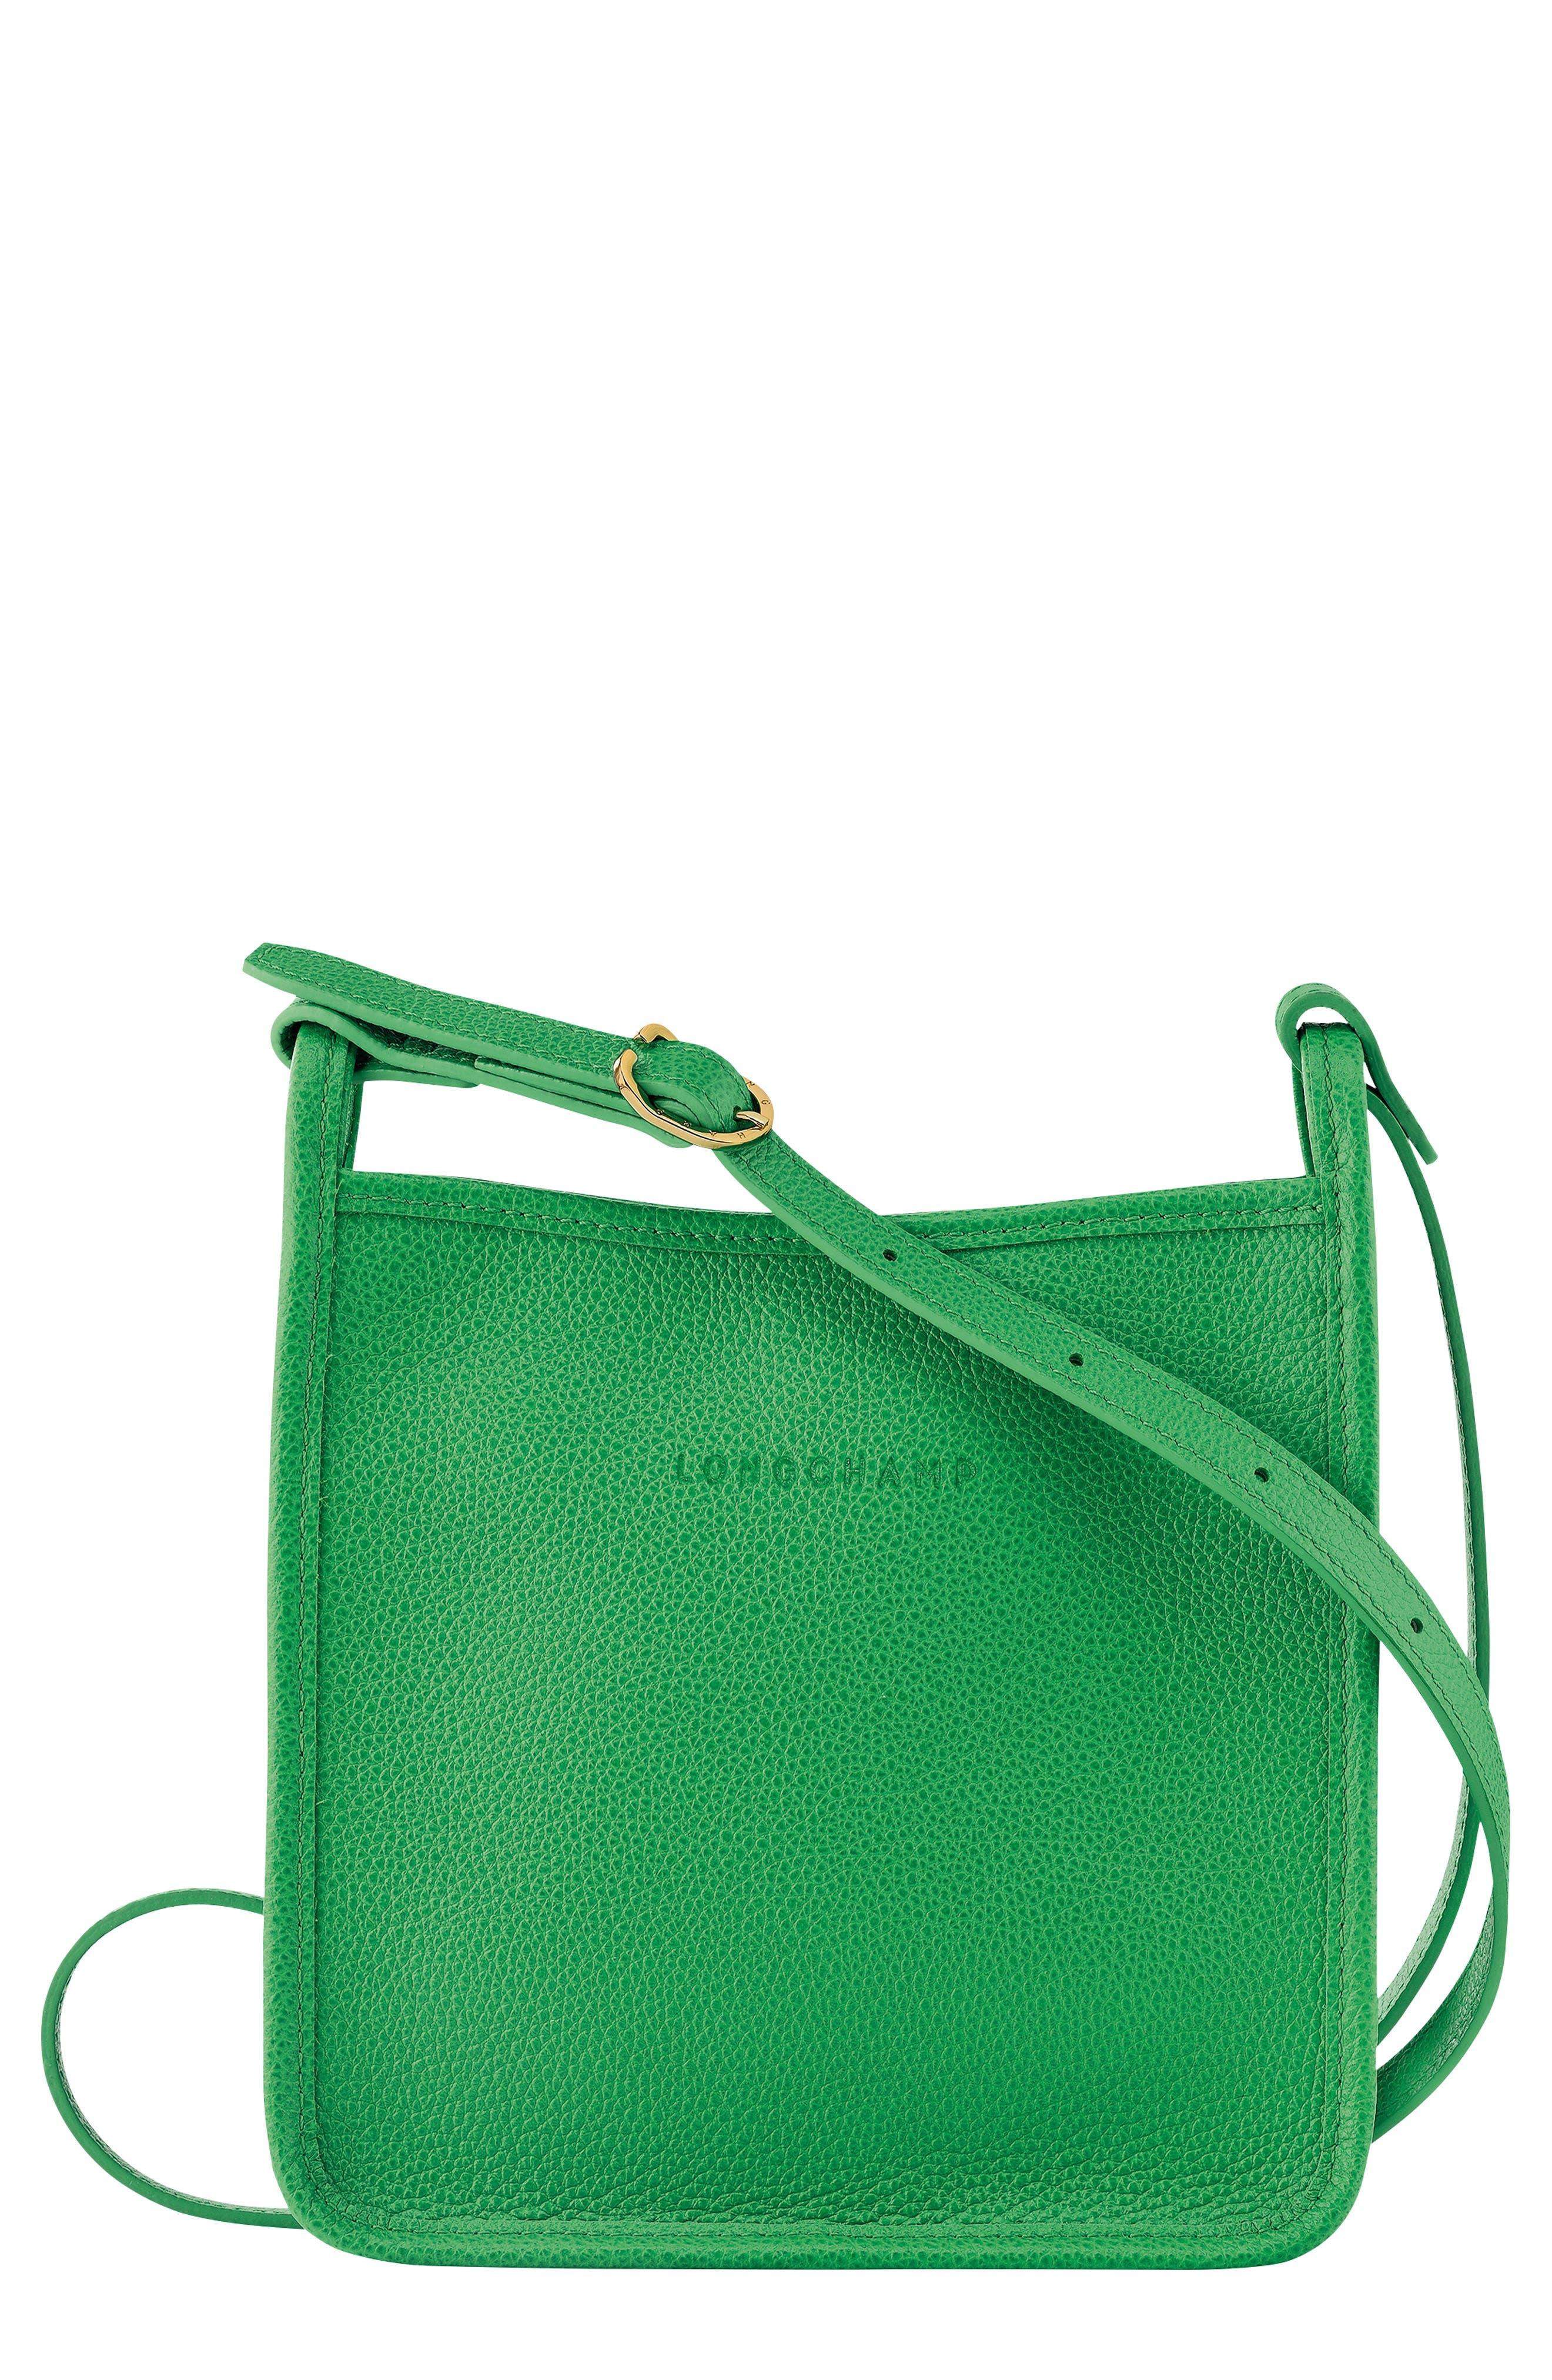 Longchamp Le Foulonné Small Crossbody Bag in Green